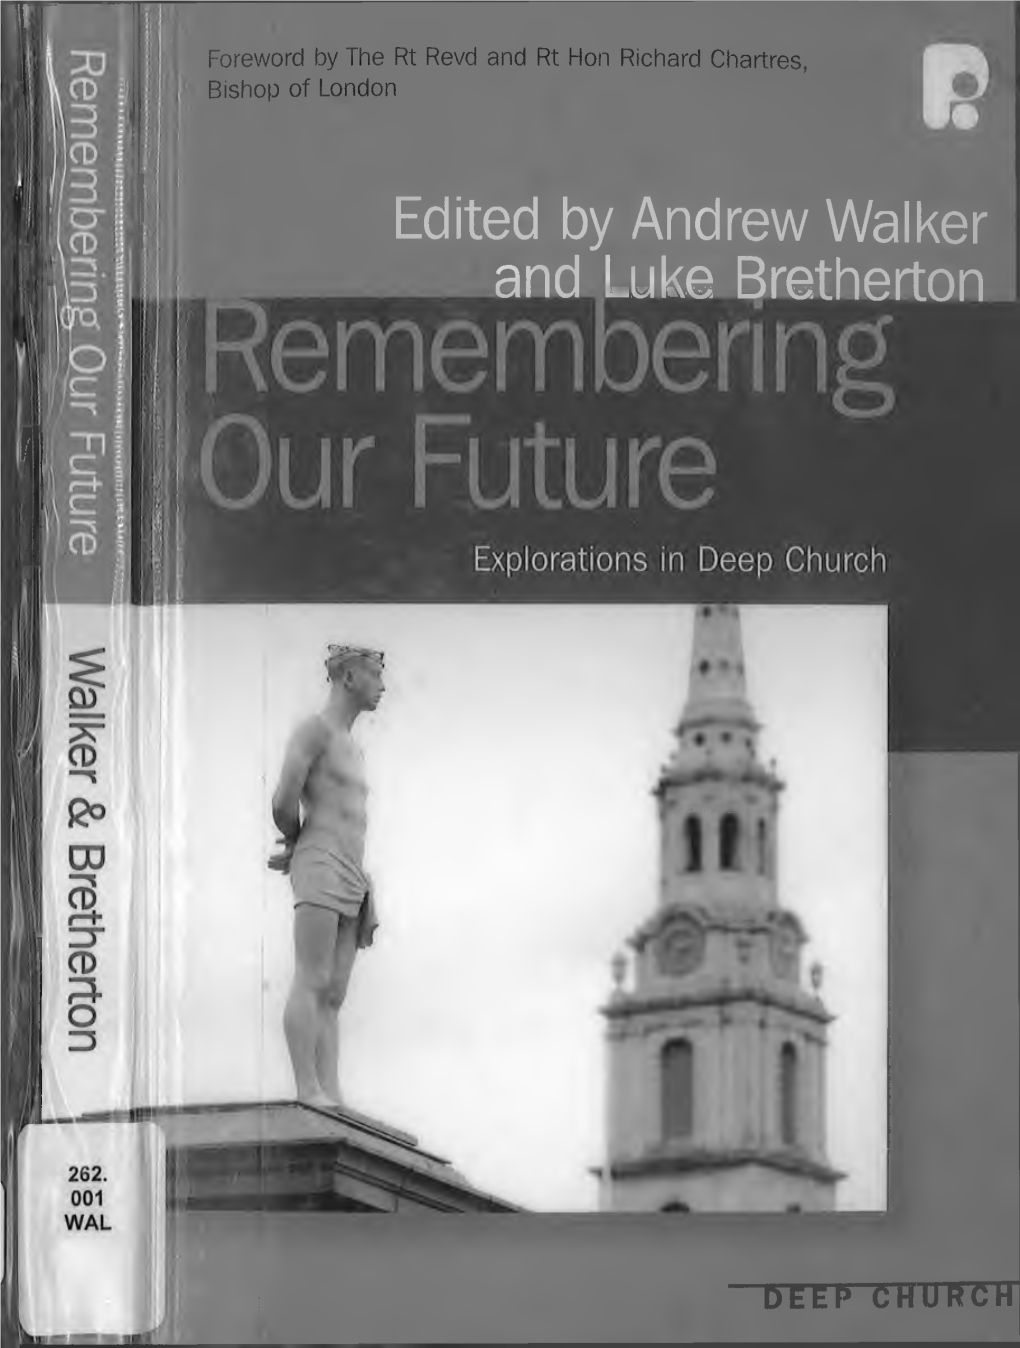 Edited by Andrew Walker and Luke Bretherton